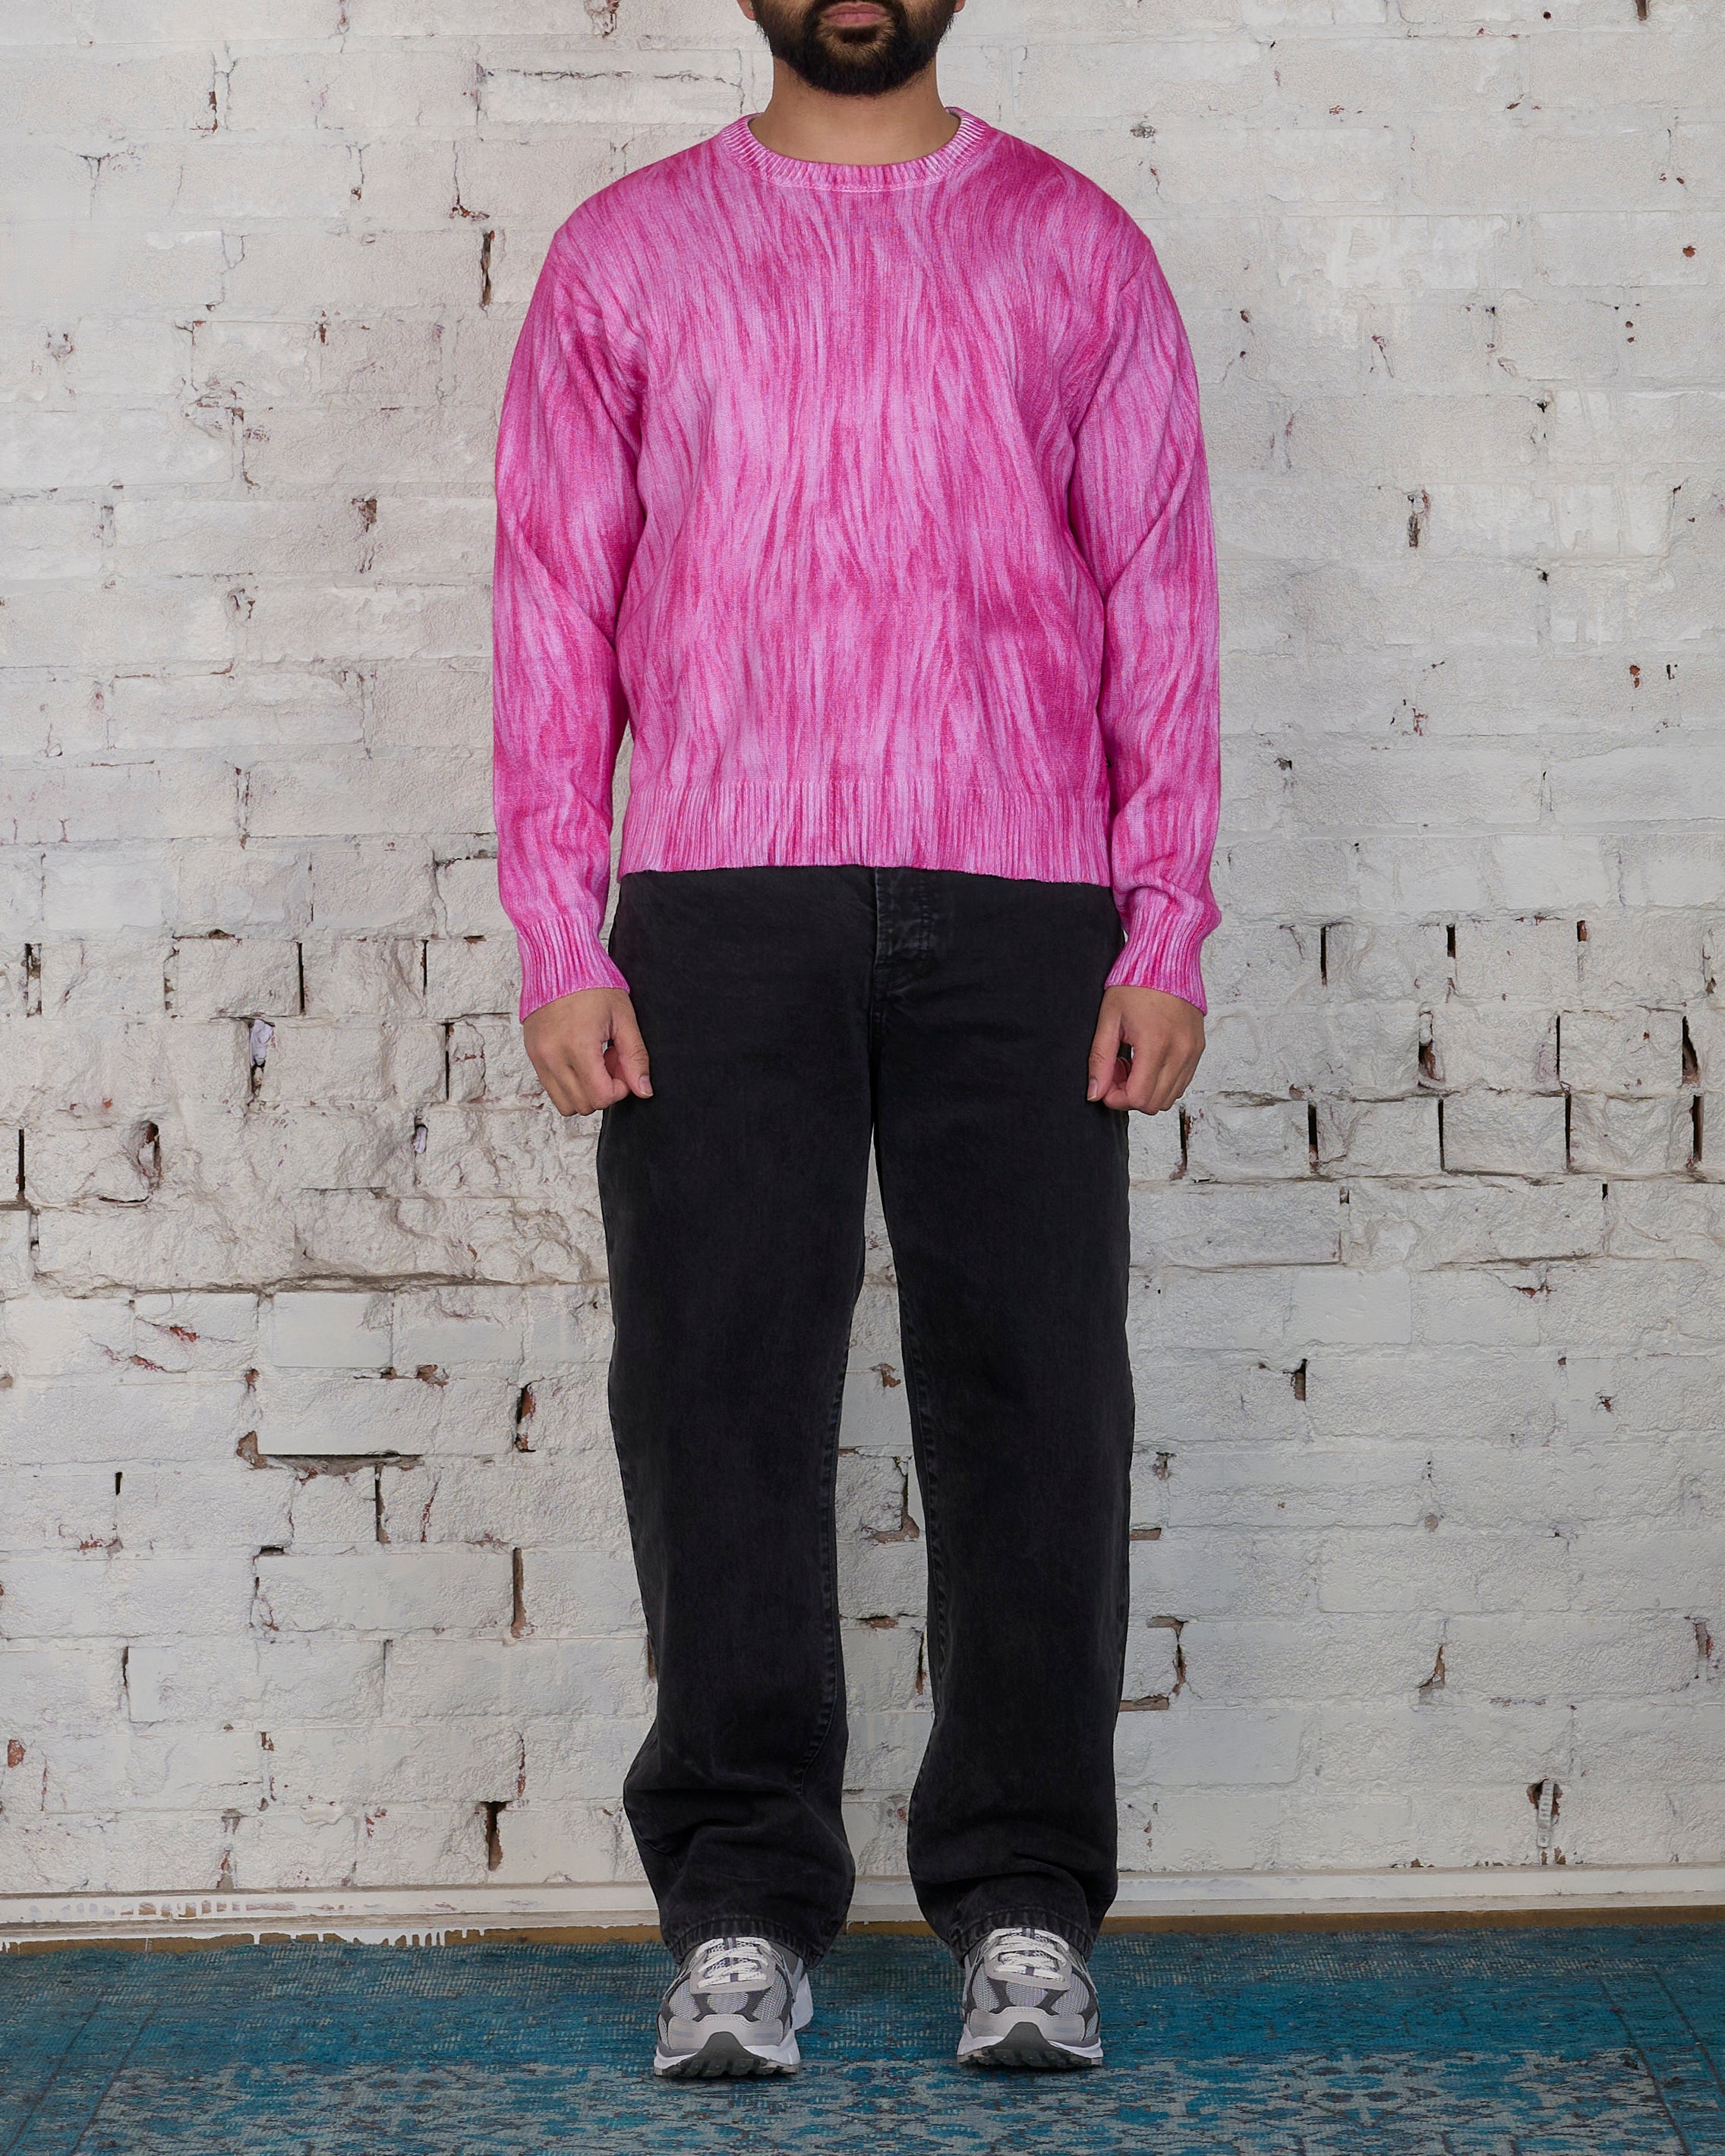 STUSSY “Printed Fur Sweater” S